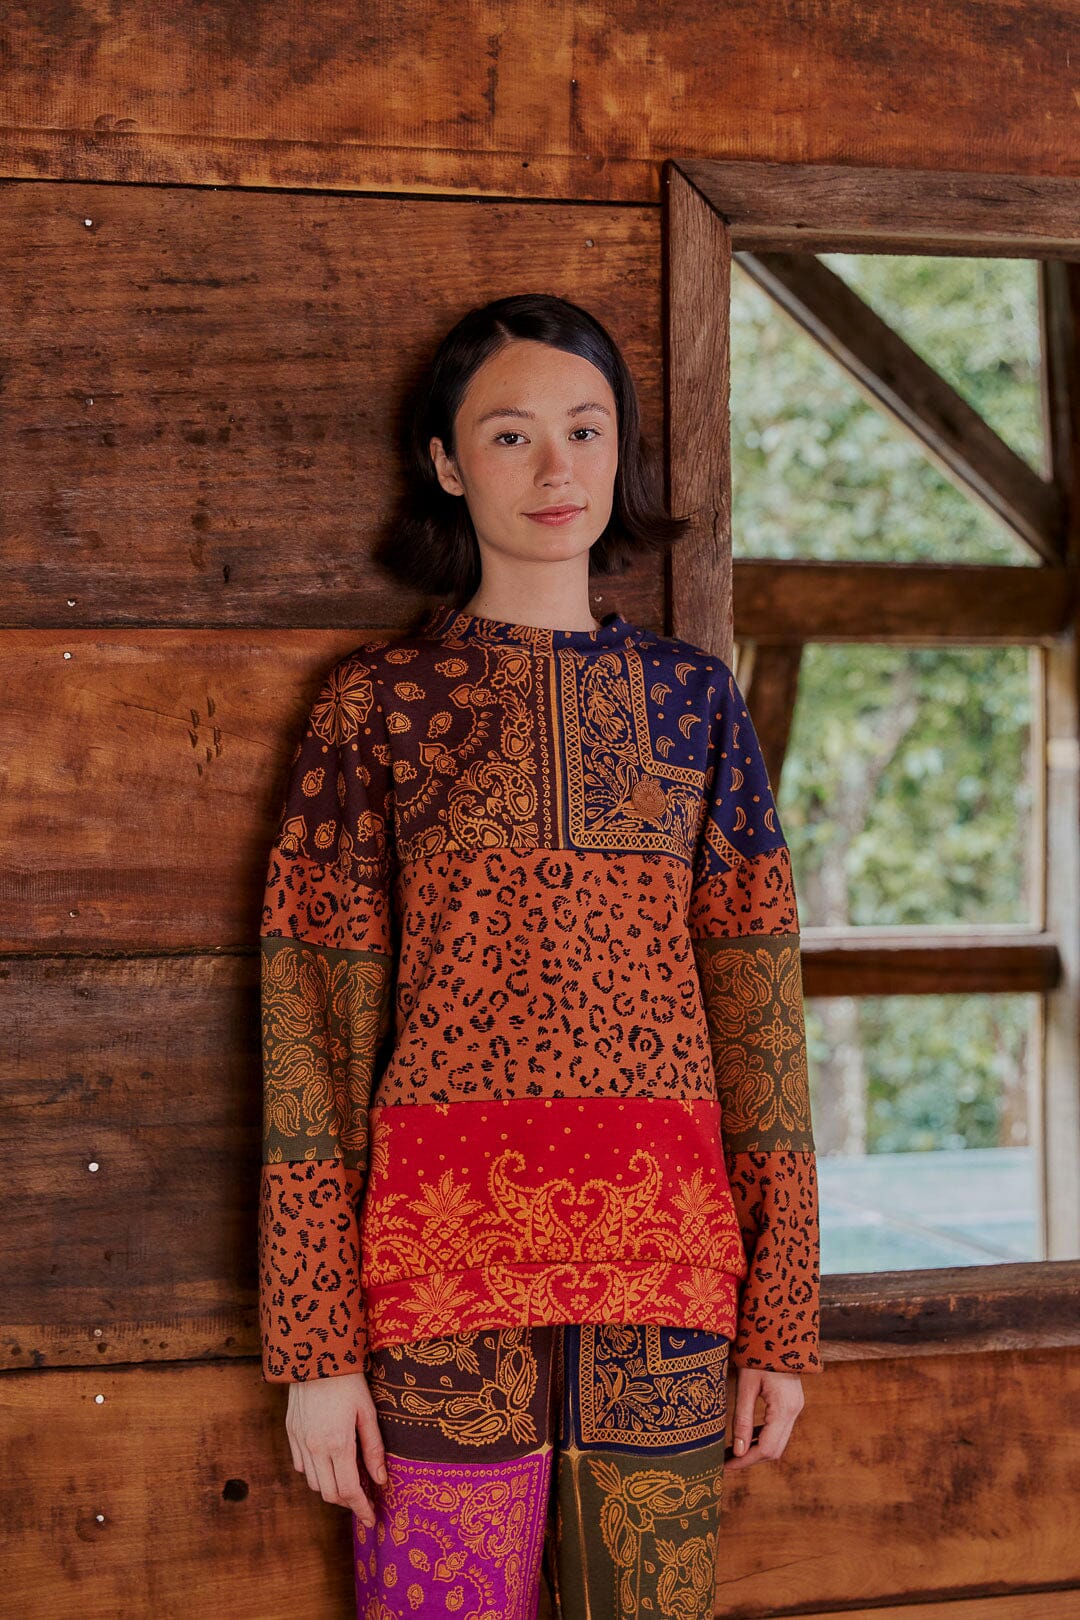 Bandana Dream Mixed Leopard Texture Sweatshirt